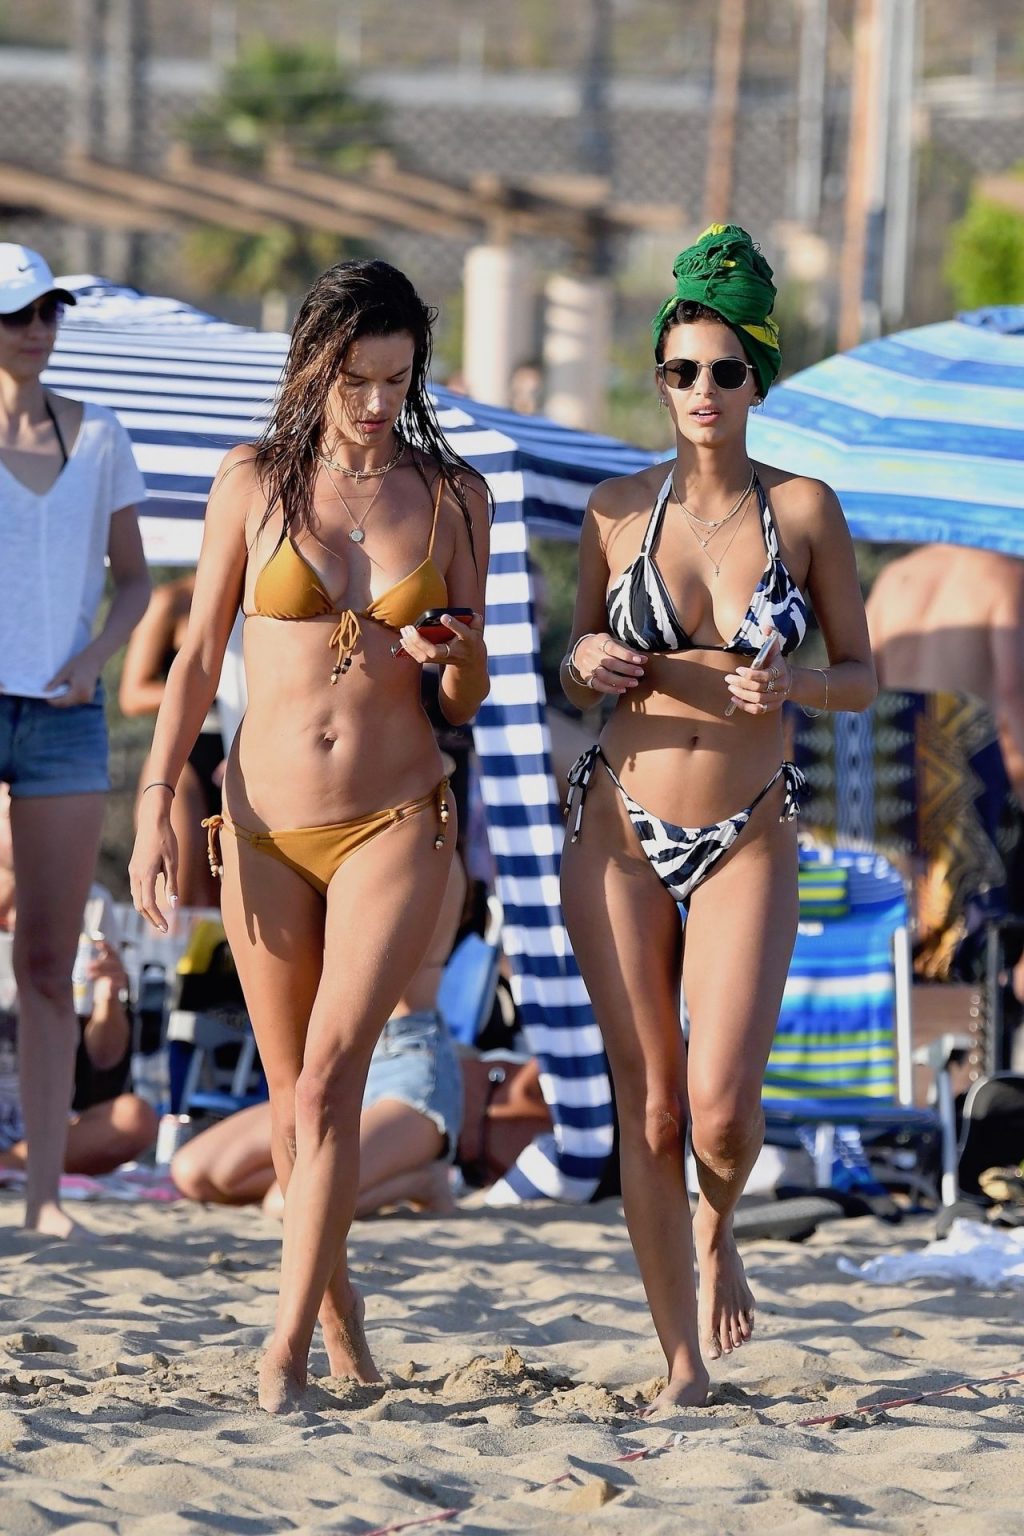 Marcela Braga Enjoys a Fun Beach Day with Friends (31 Photos)